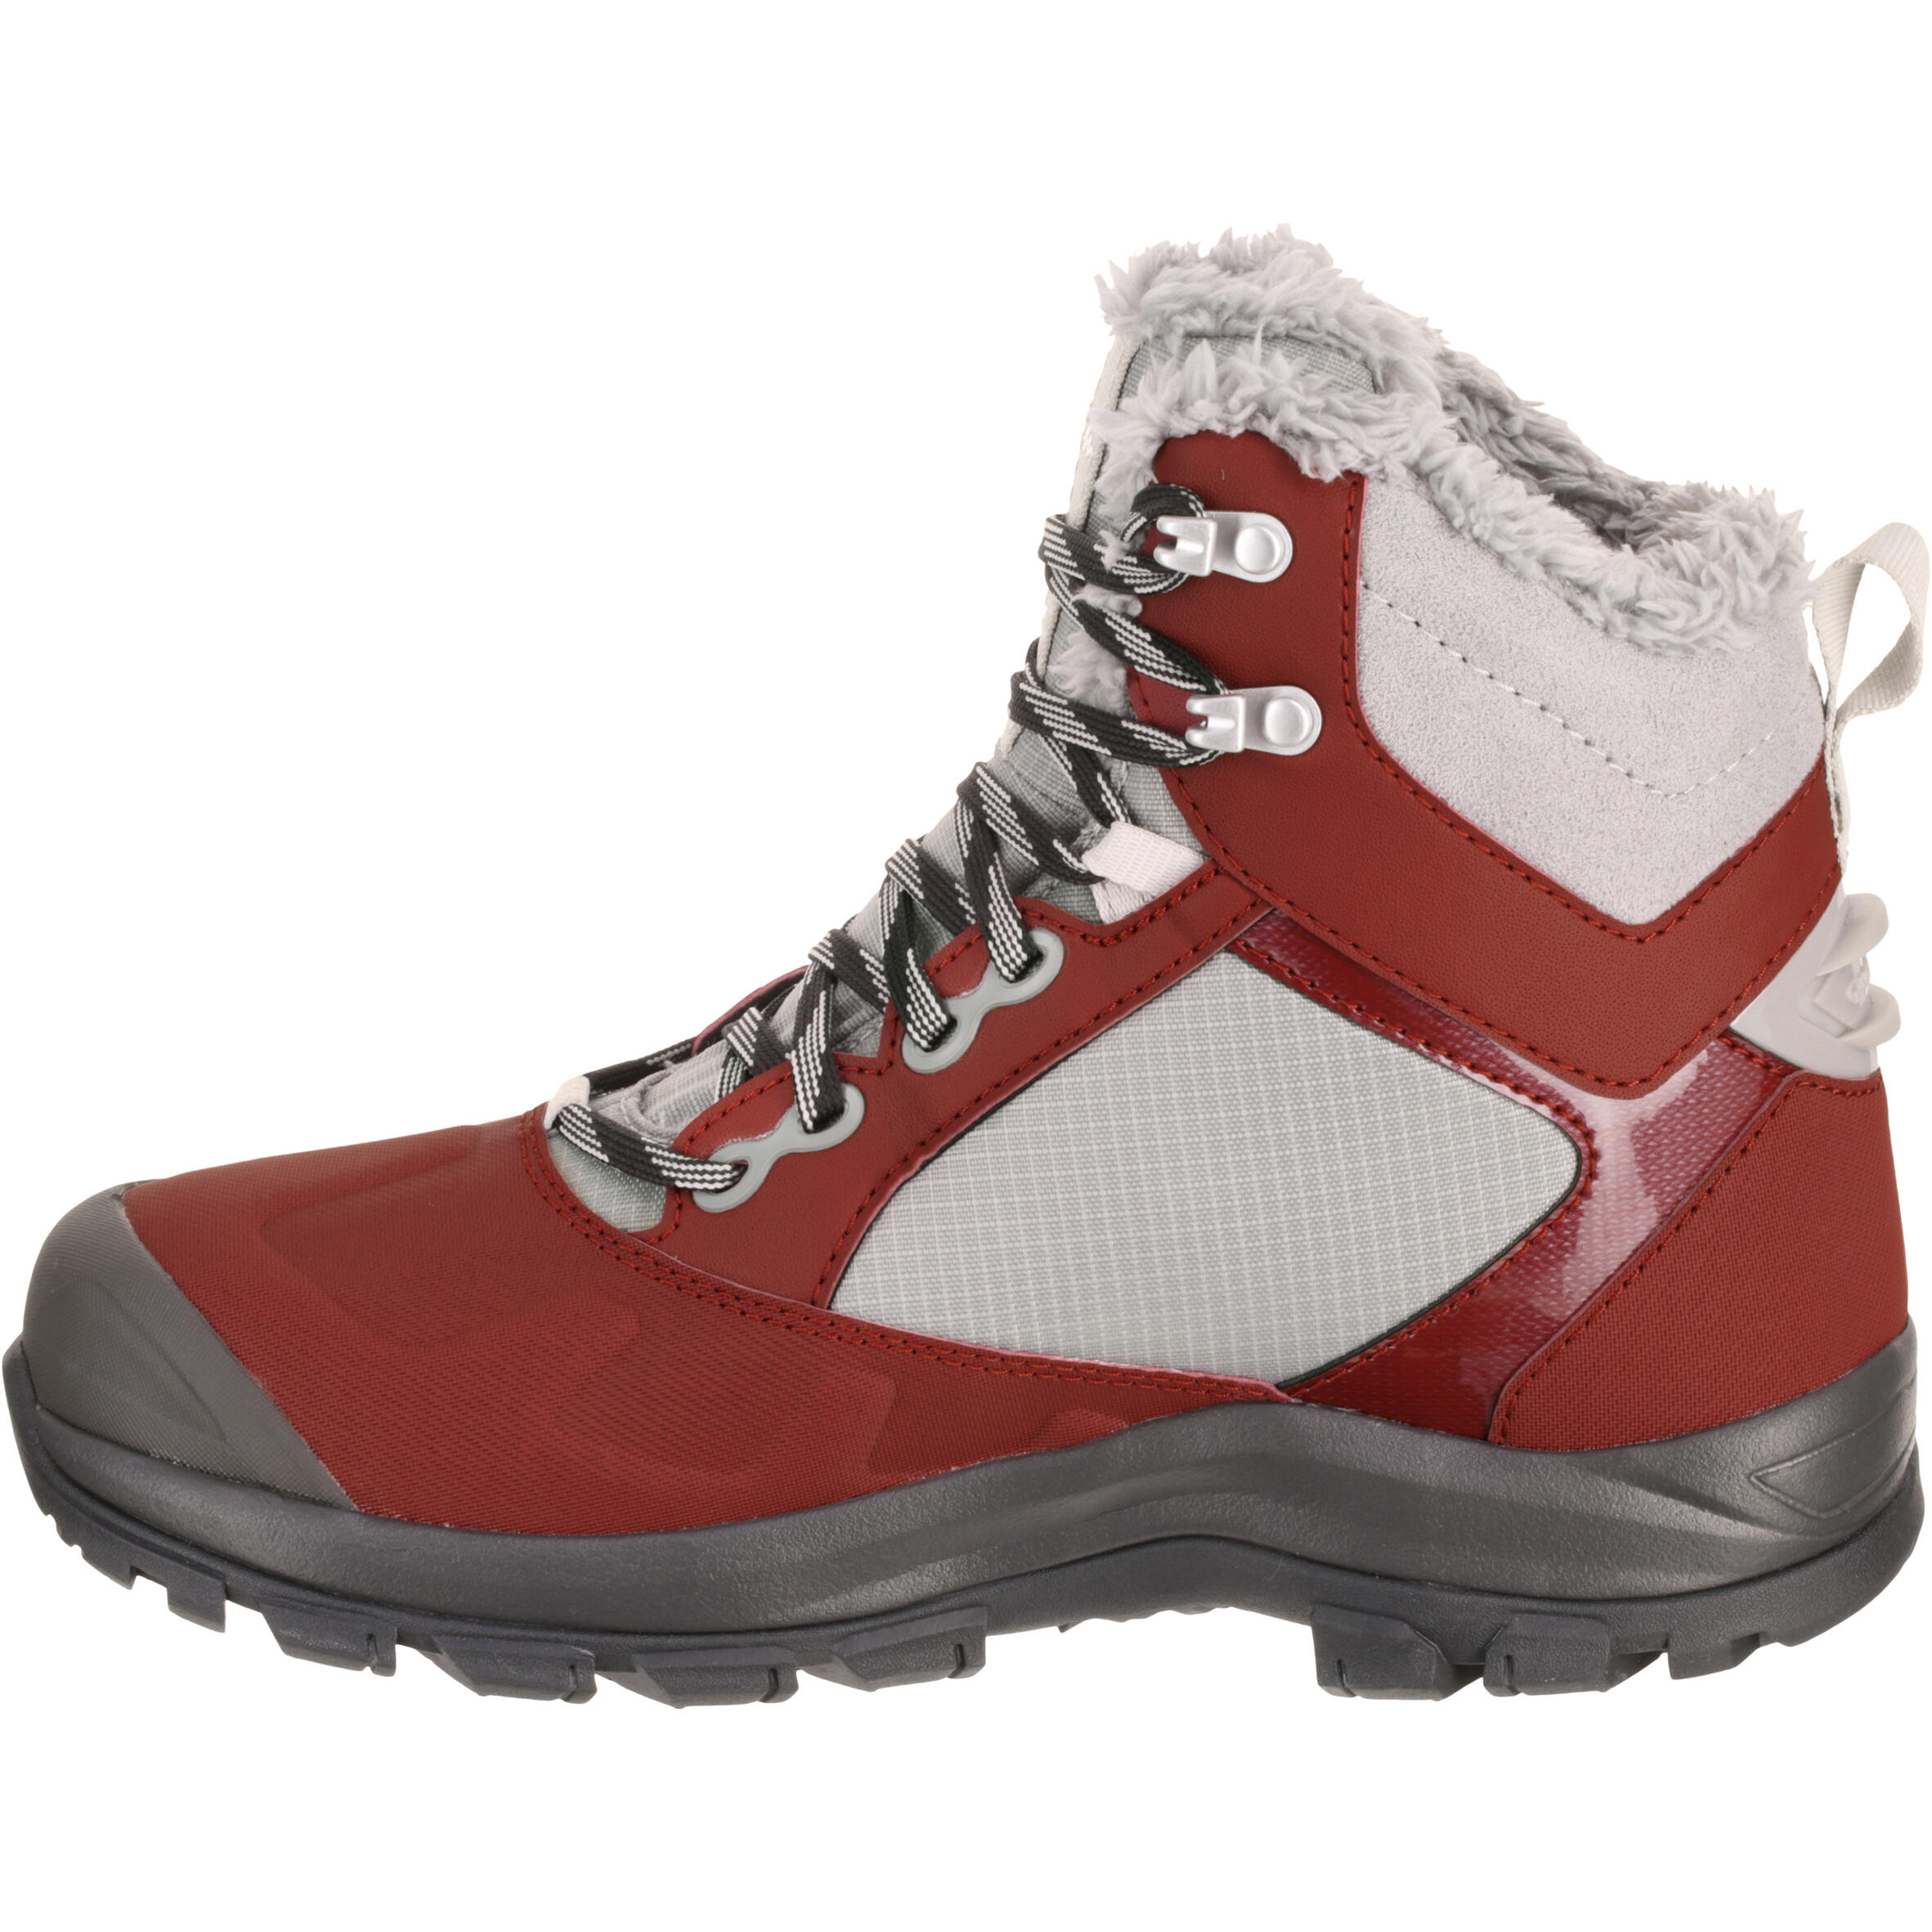 Forclaz 500 Waterproof Women'S Hiking Boots - Burgundy 5/16